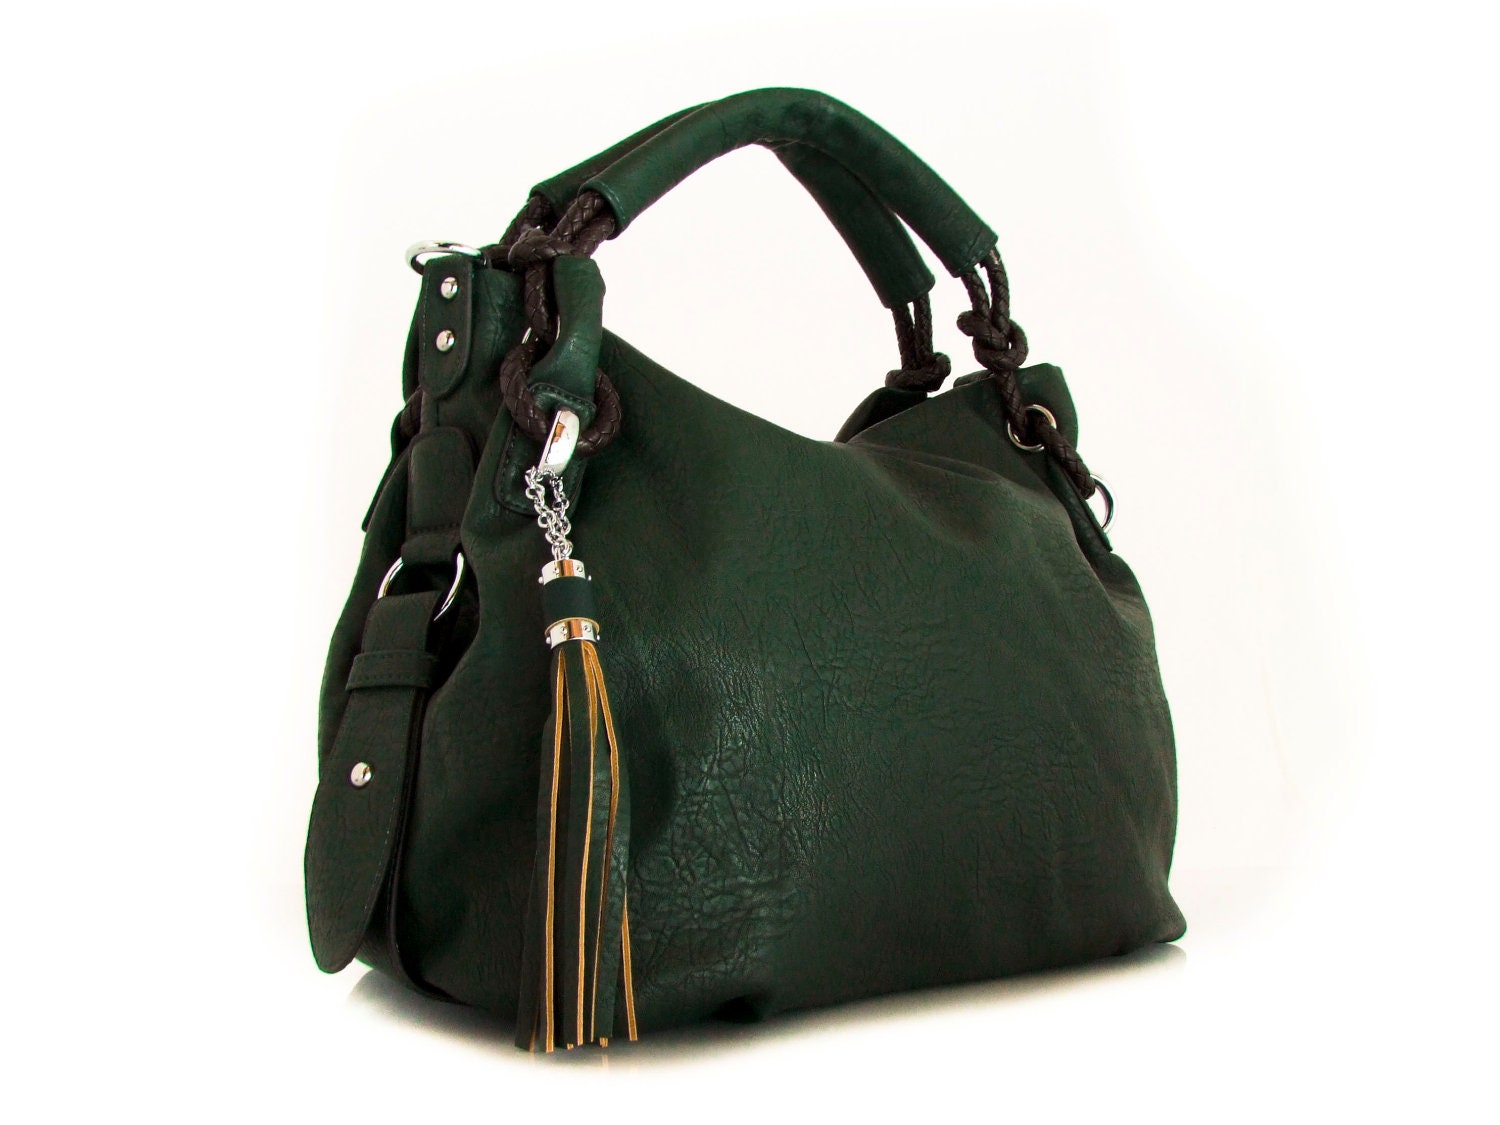 Handmade vegan leather handbag purse green by VeganLeatherHandbags